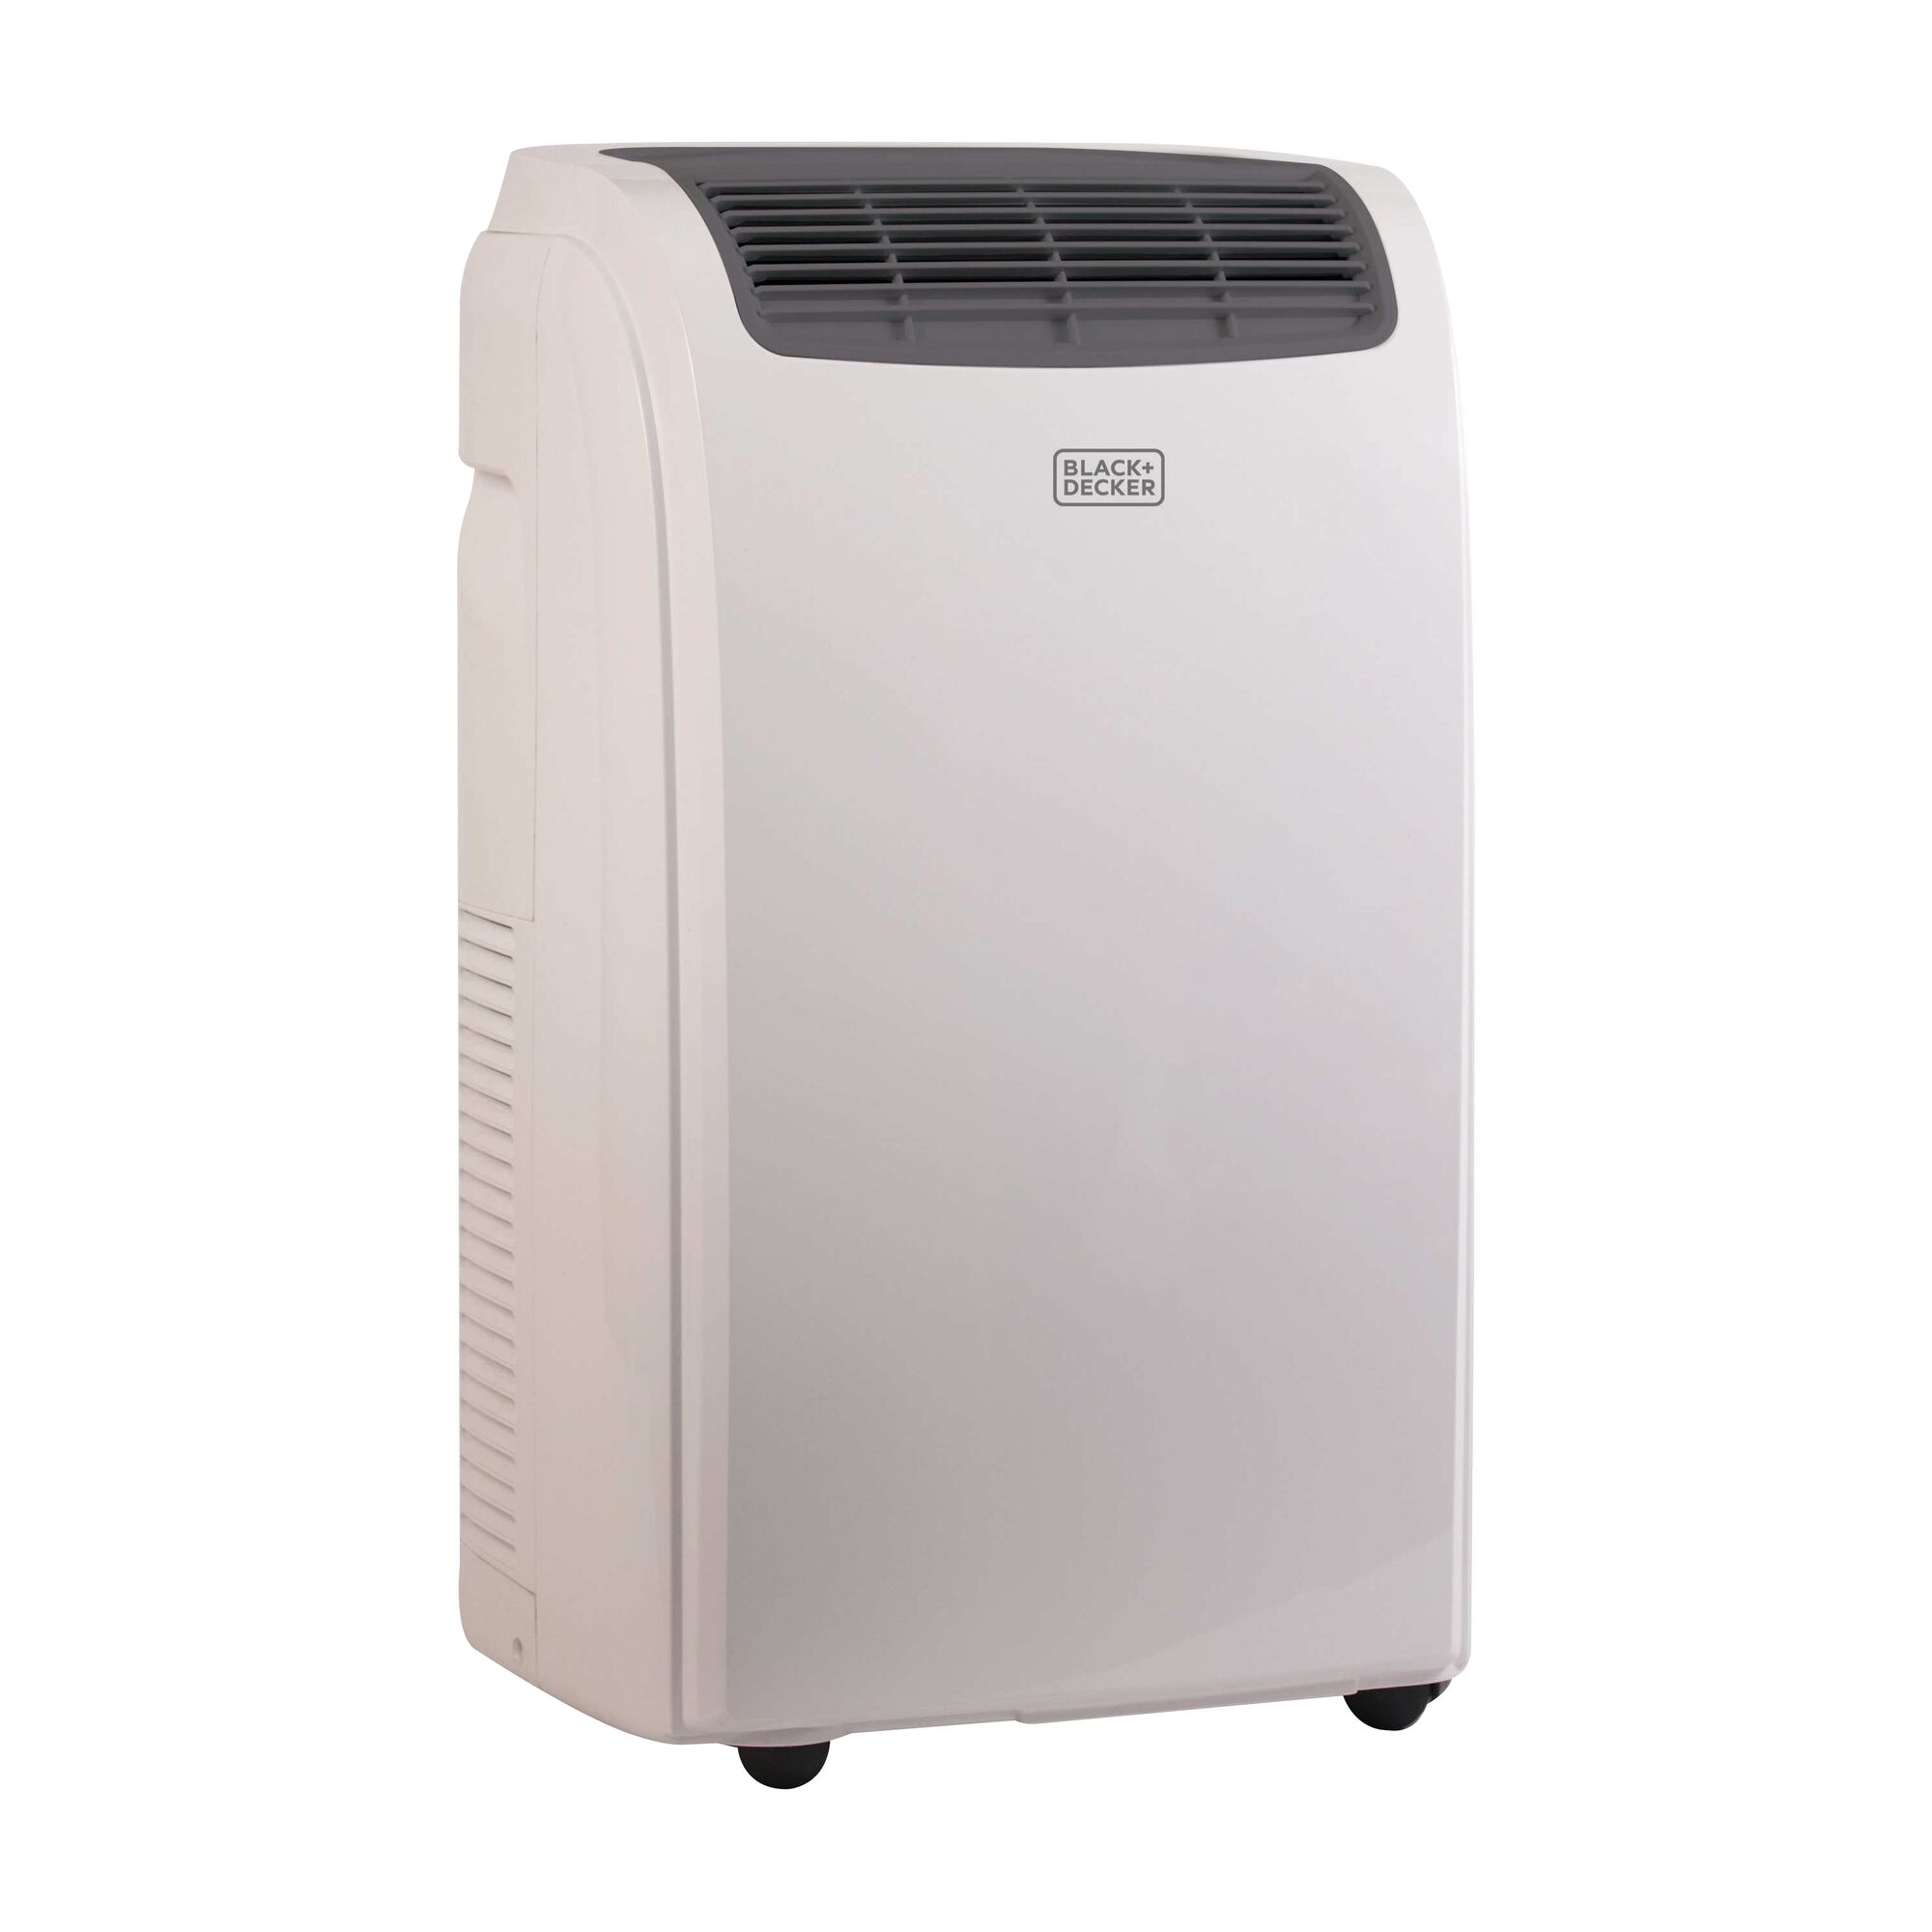 Profile of 5950 B T U portable air conditioner with remote control.